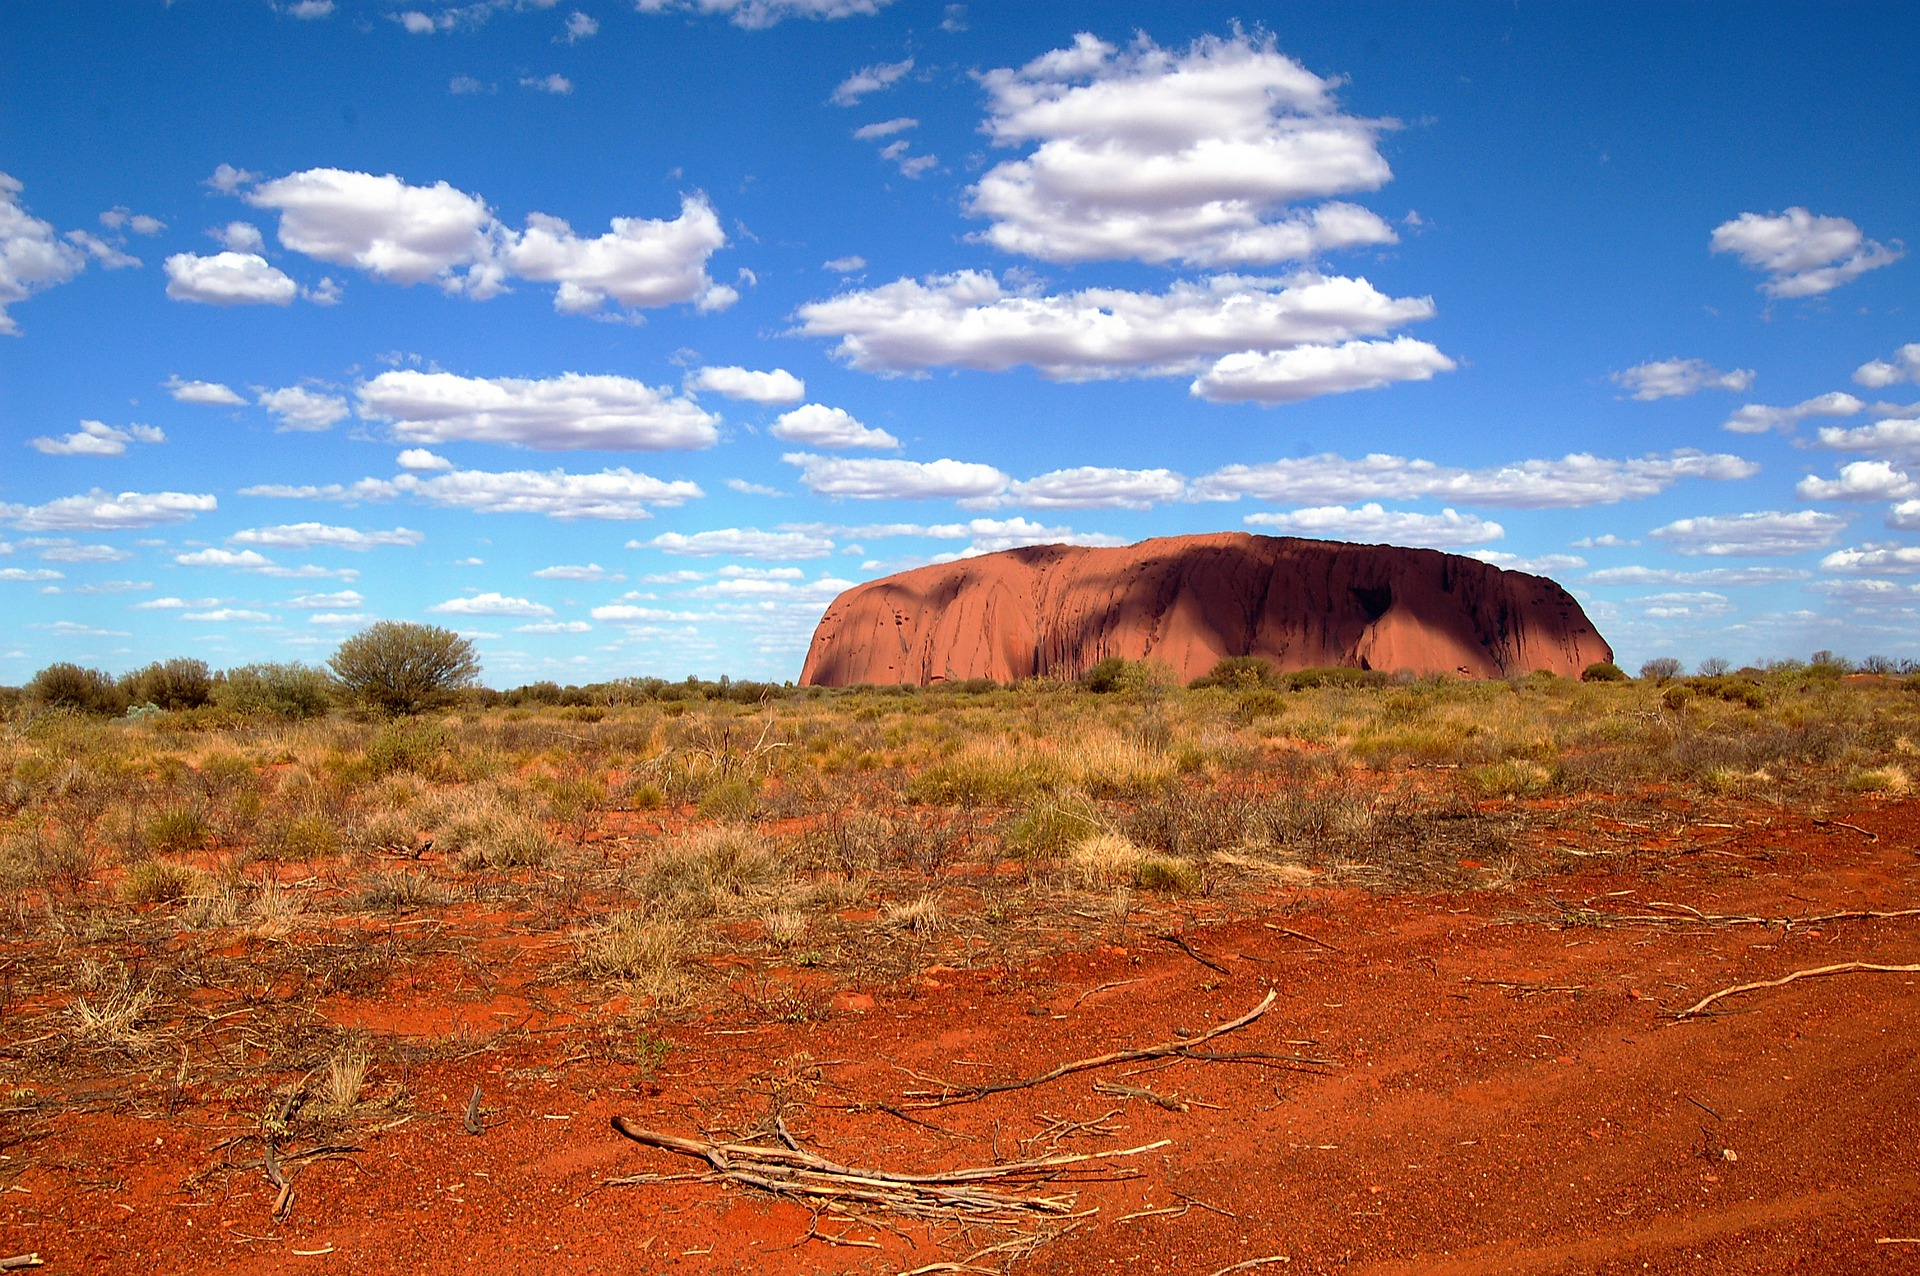 Uluru (Ayers Rock) in Australia